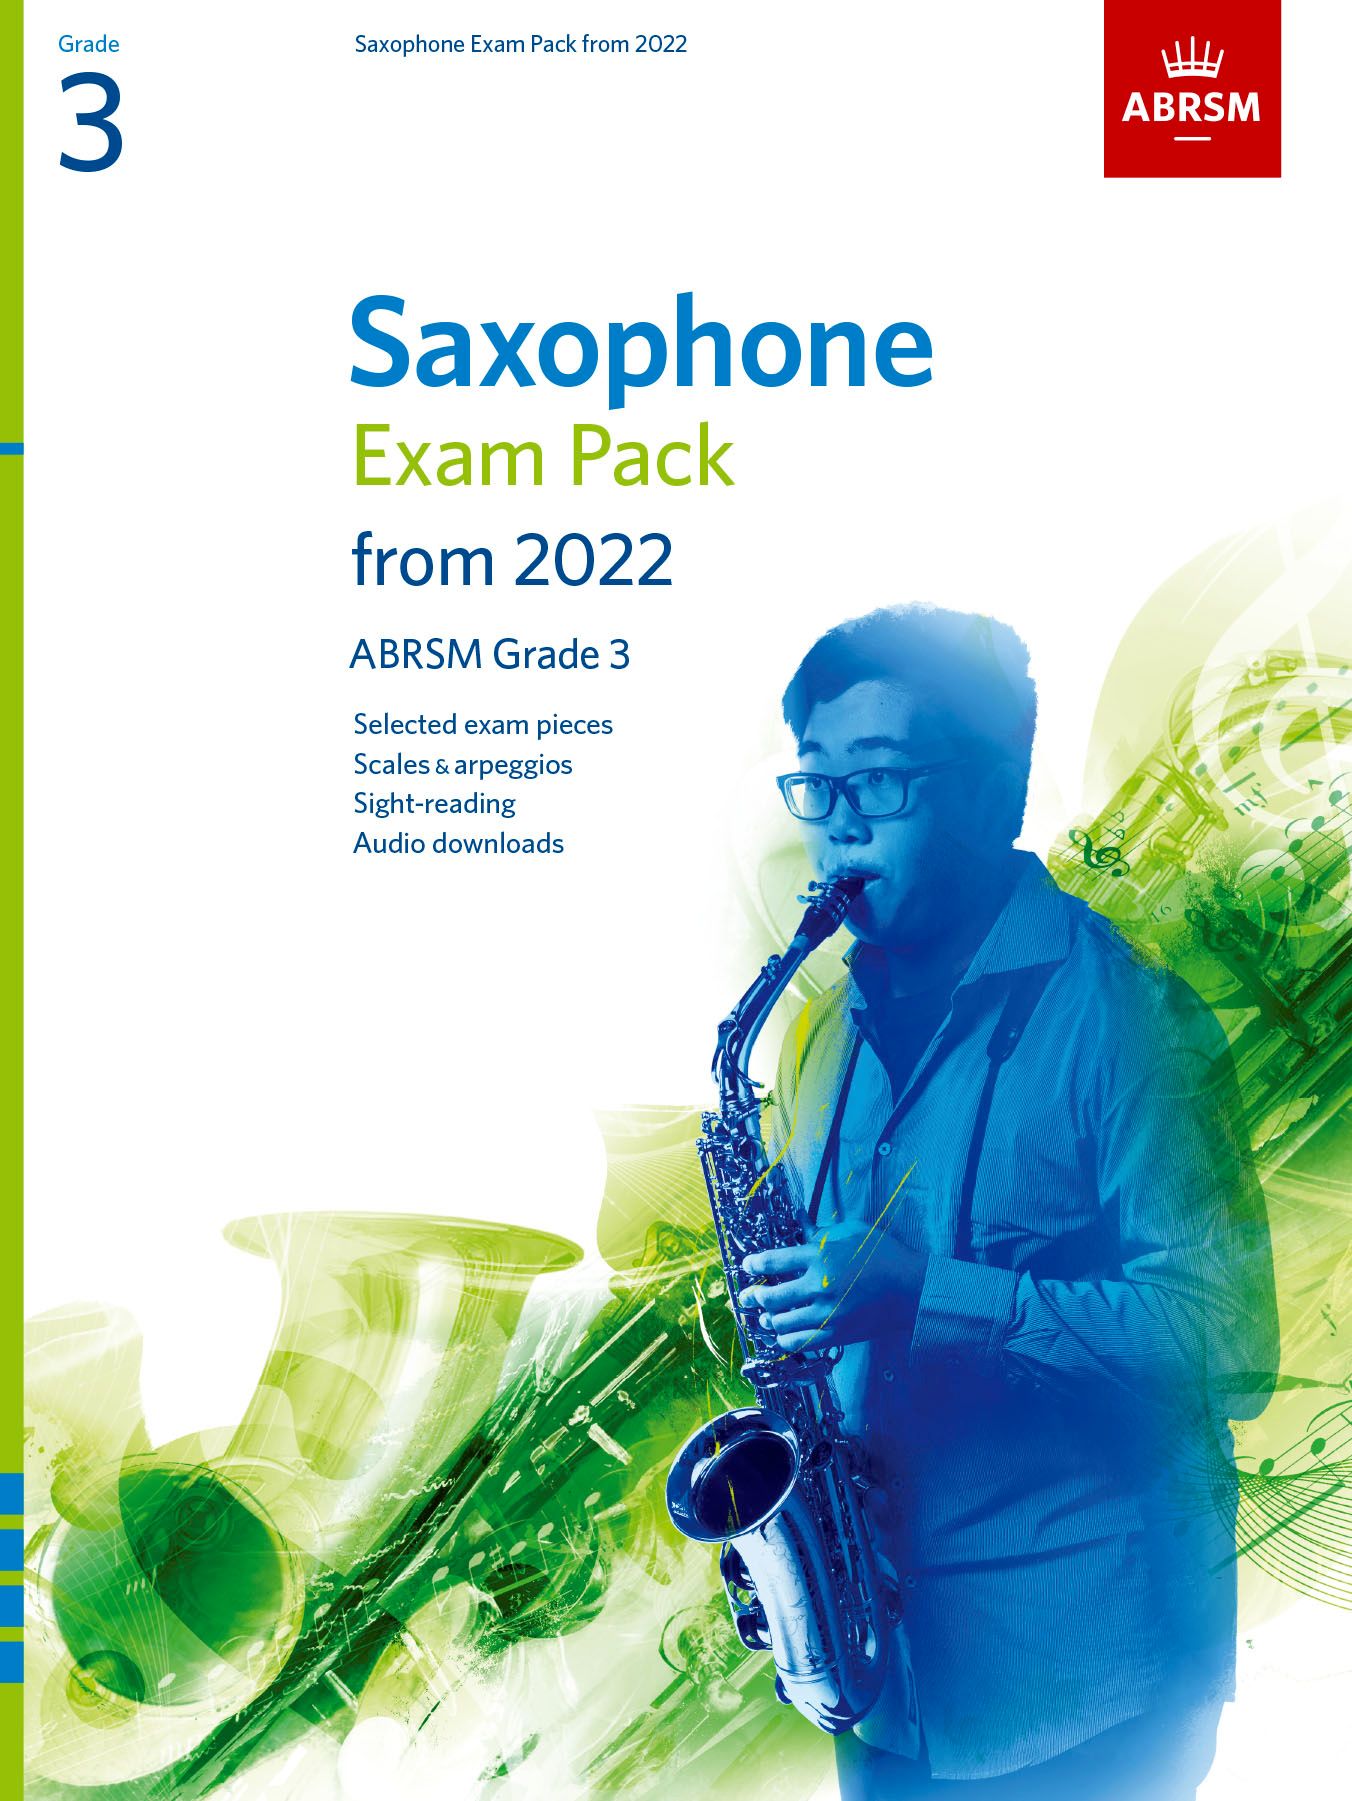 ABRSM Saxophone Exam Pack from 2022, ABRSM Grade 3